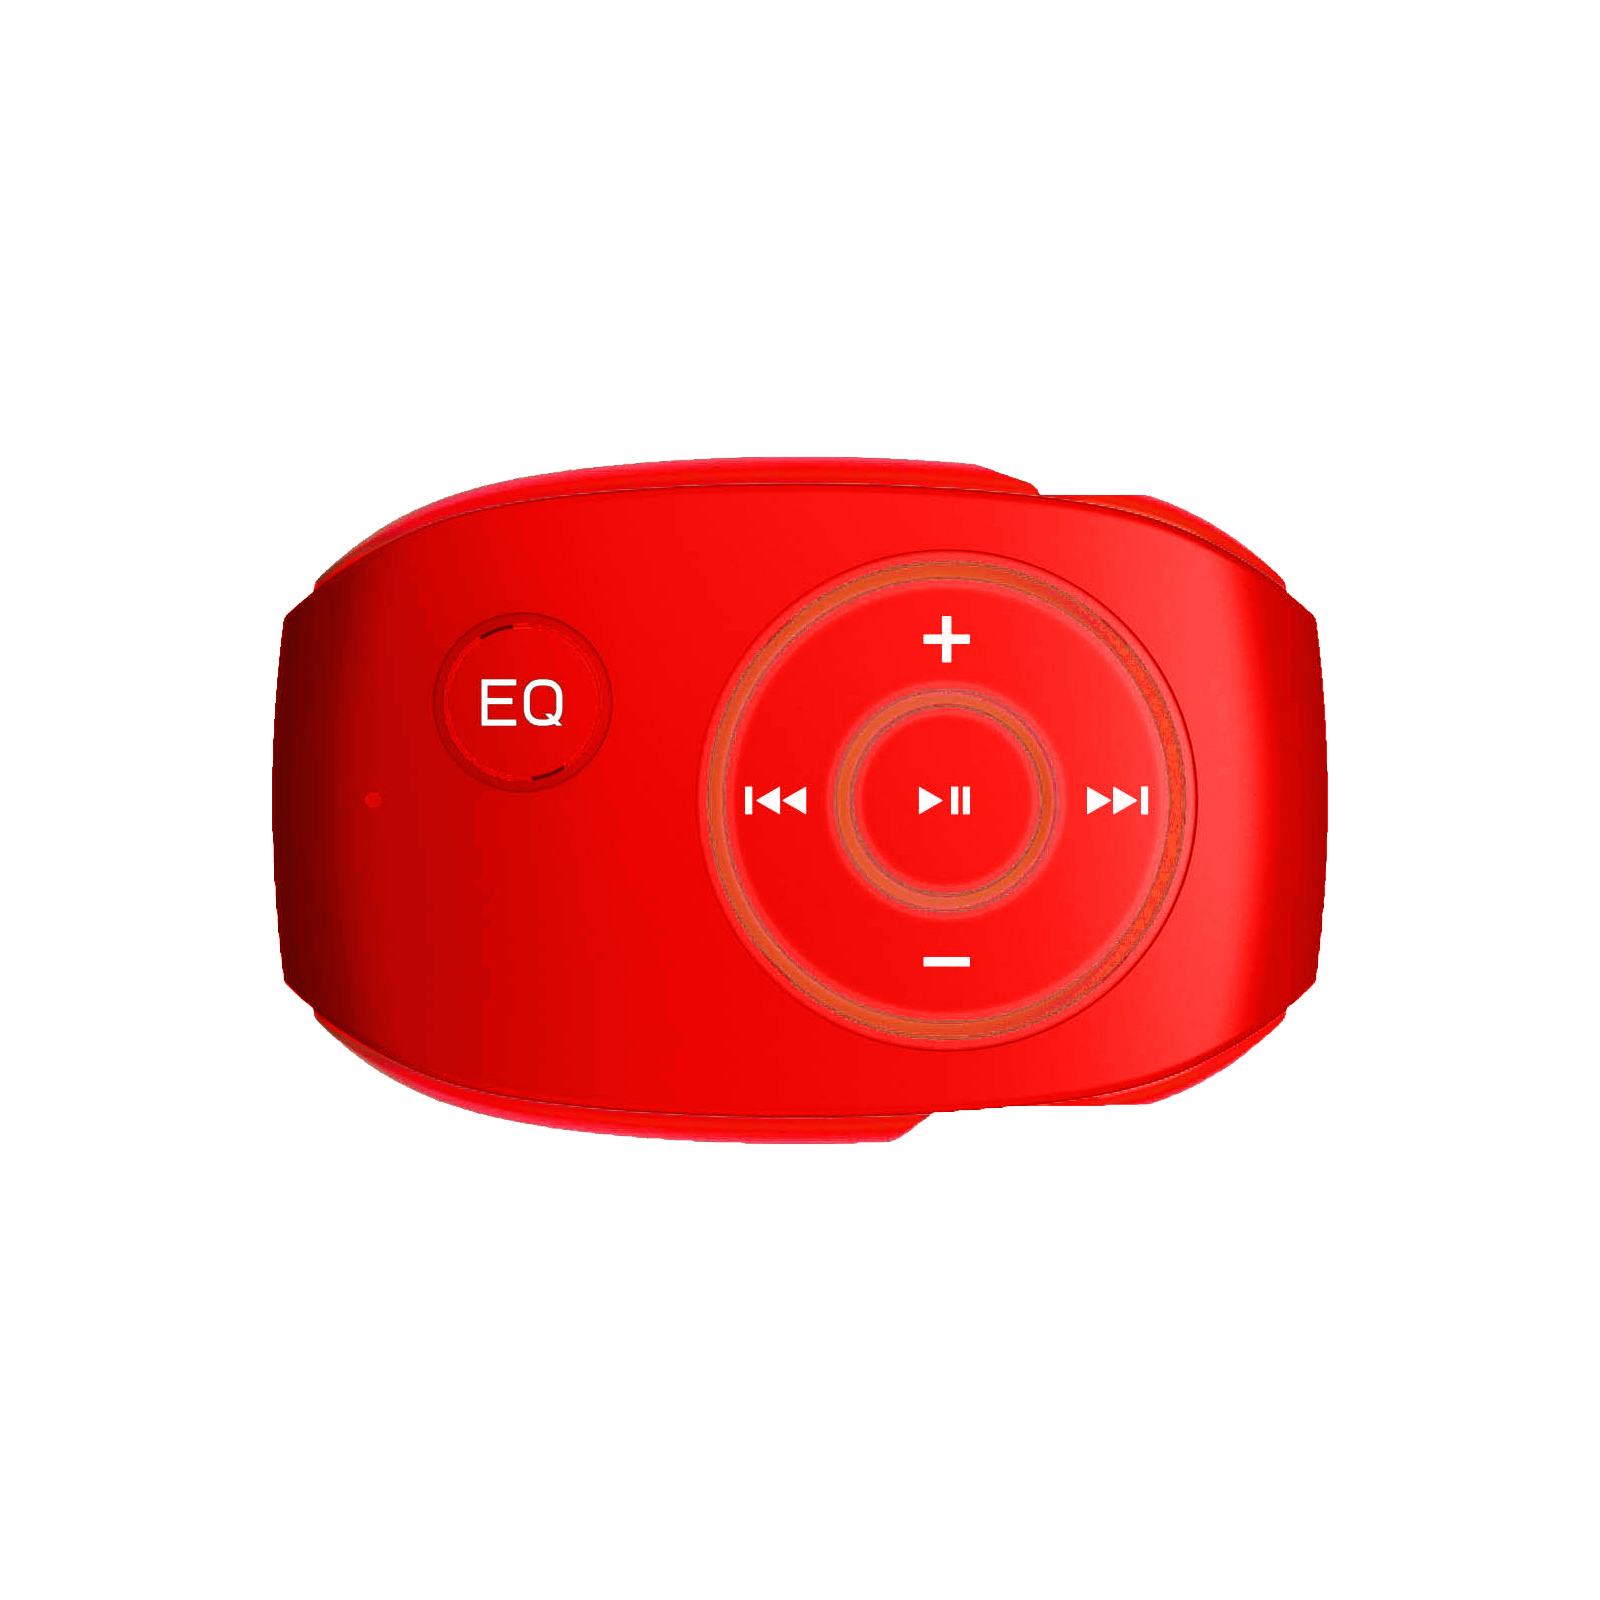 MP3 плеер Astro M2 Red изображение 2